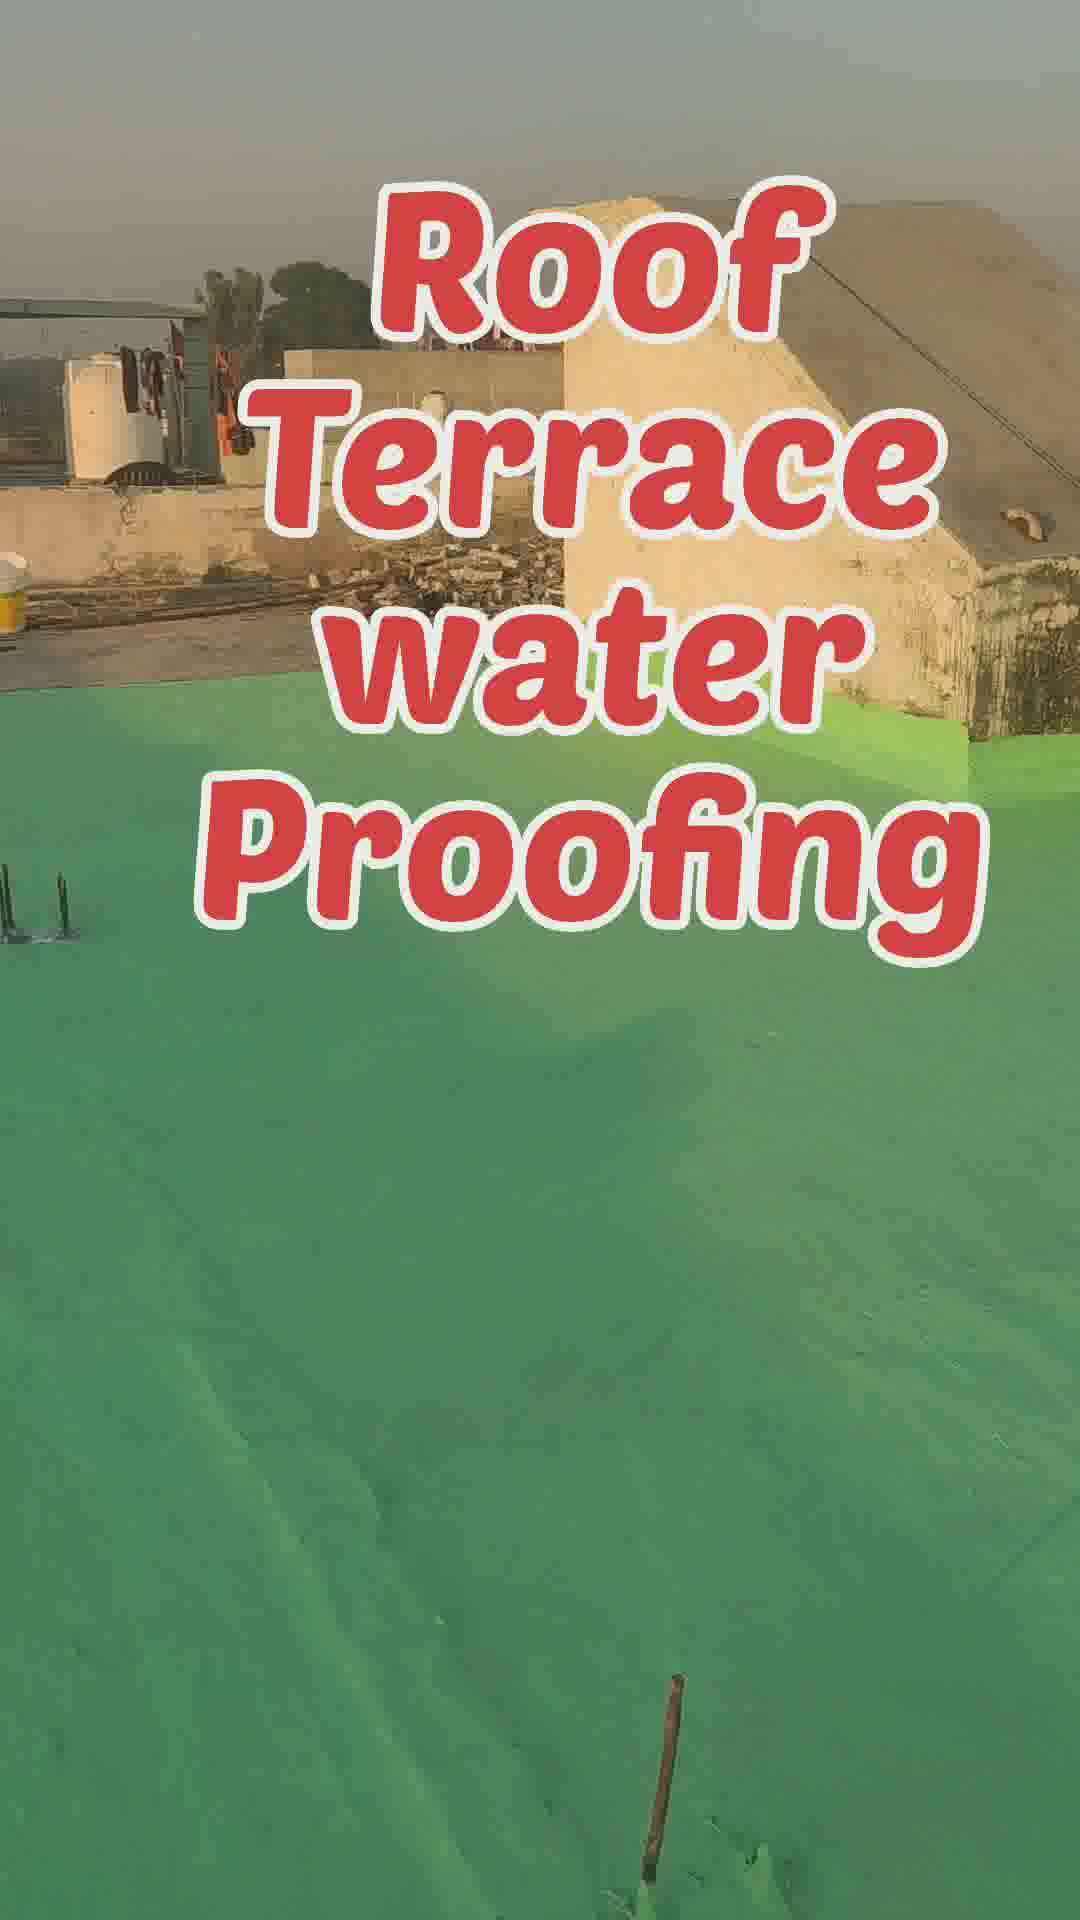 roof terrace water proofing
 #WaterProofing